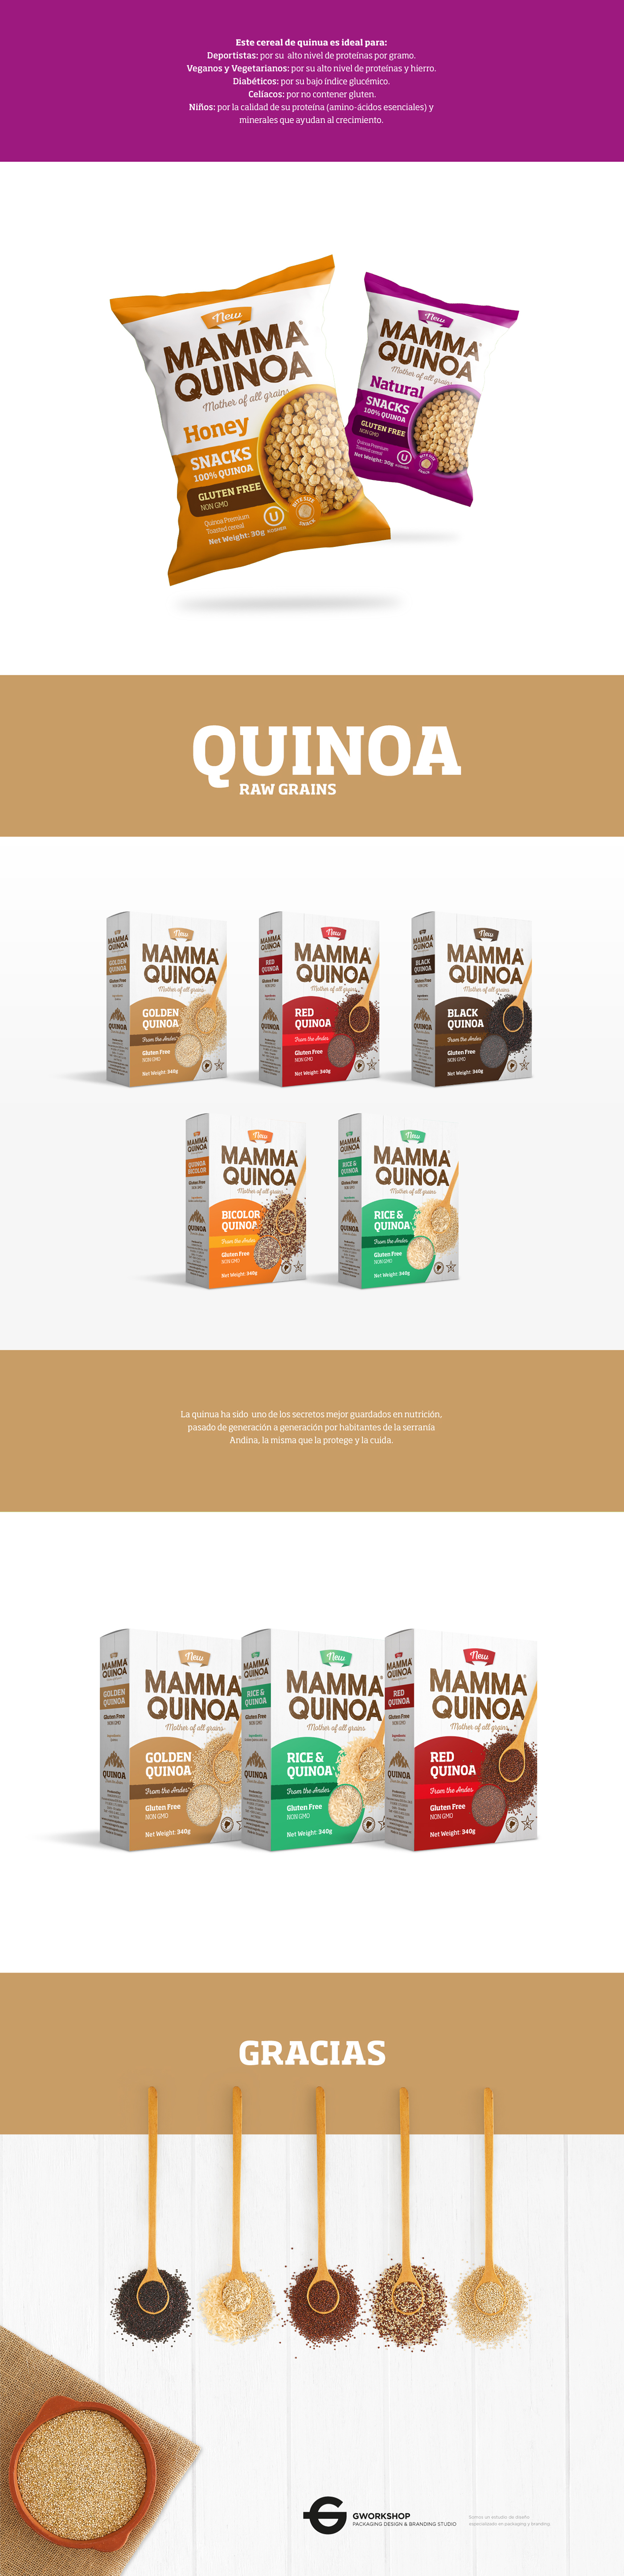 quinoa Packaging mamma Andes Ecuador snack Cereal raw gworkshop design